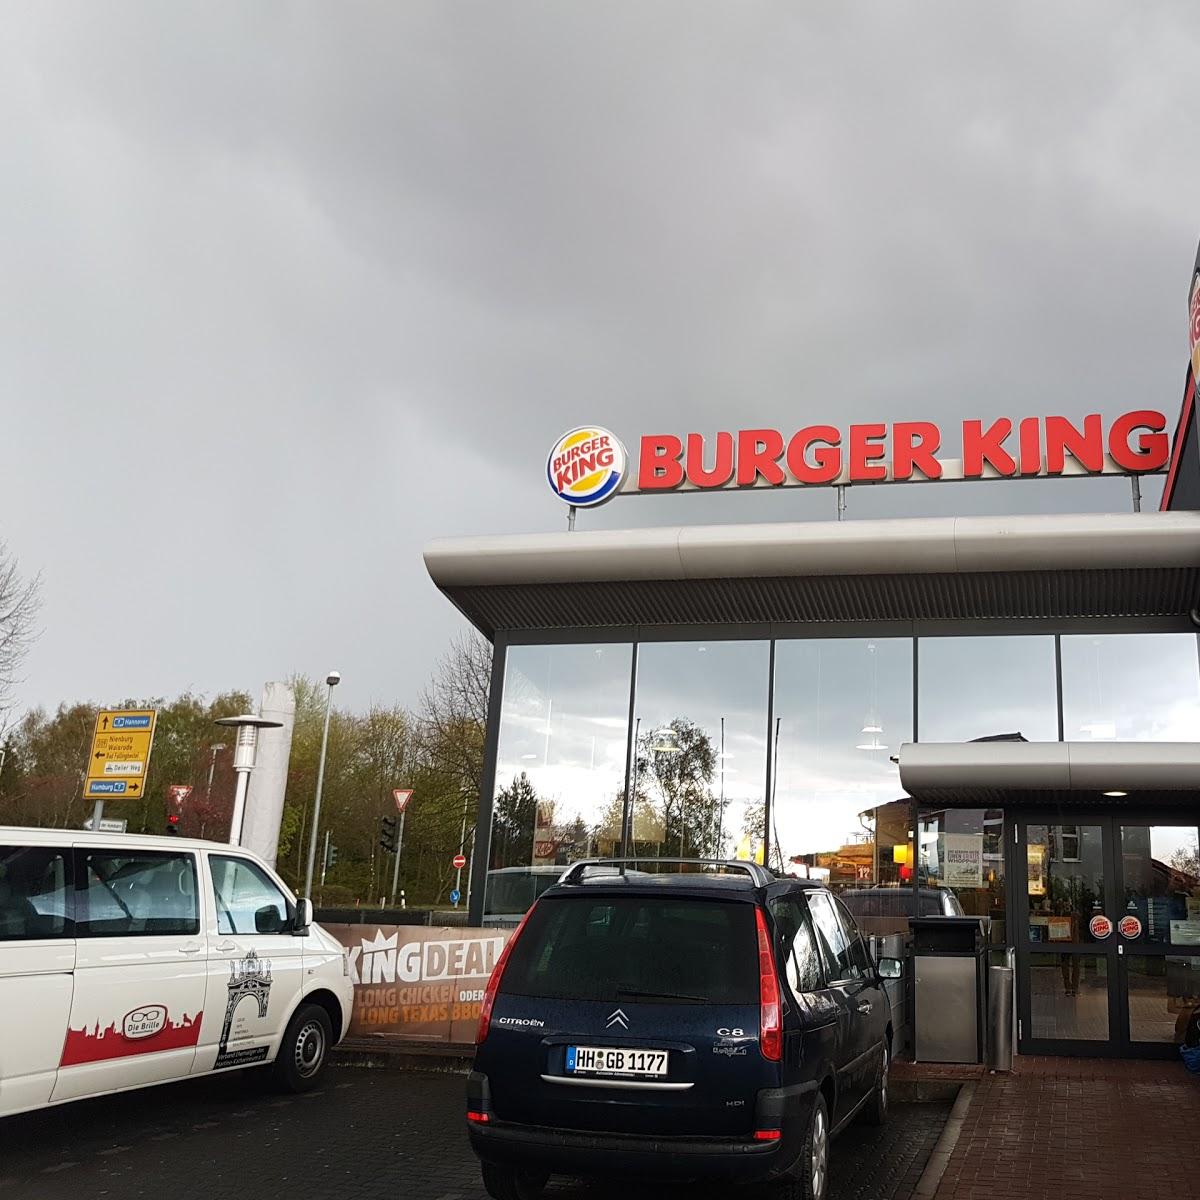 Restaurant "Burger King Fallingbostel" in Bad Fallingbostel